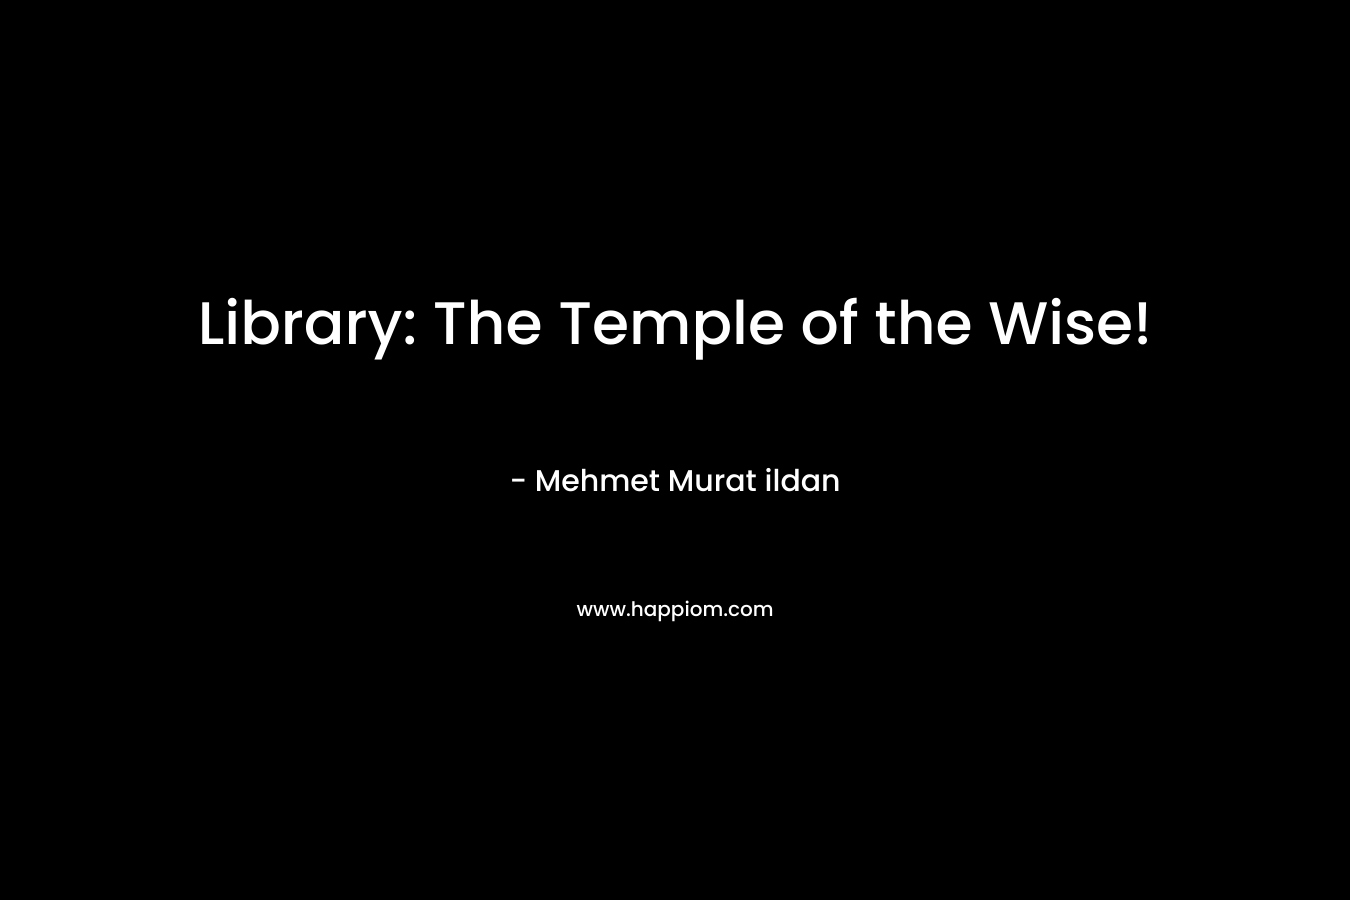 Library: The Temple of the Wise! – Mehmet Murat ildan